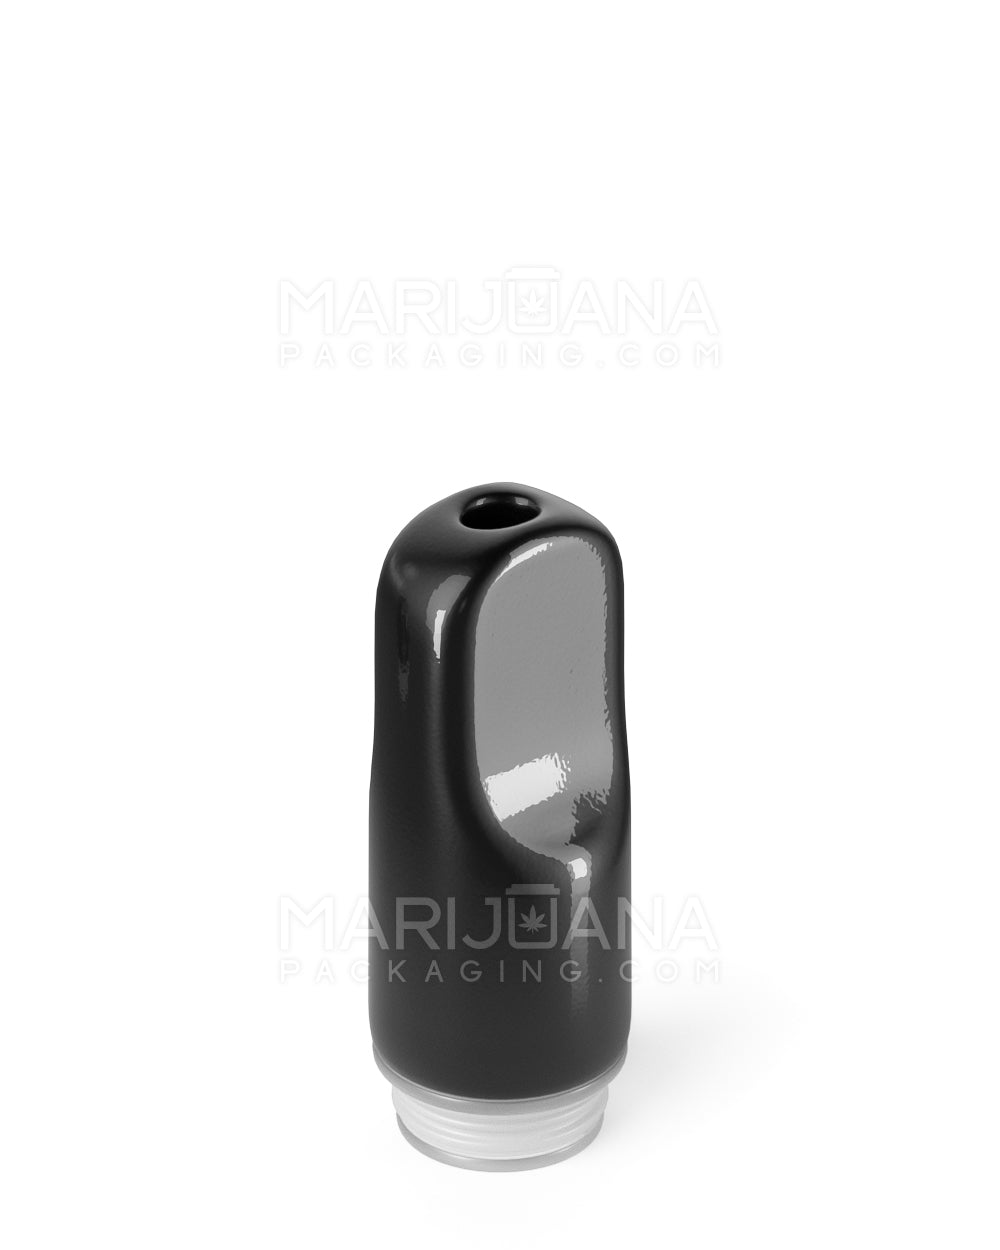 AVD | Flat Vape Mouthpiece for Glass Cartridges | Black Ceramic - Eazy Press - 600 Count - 3